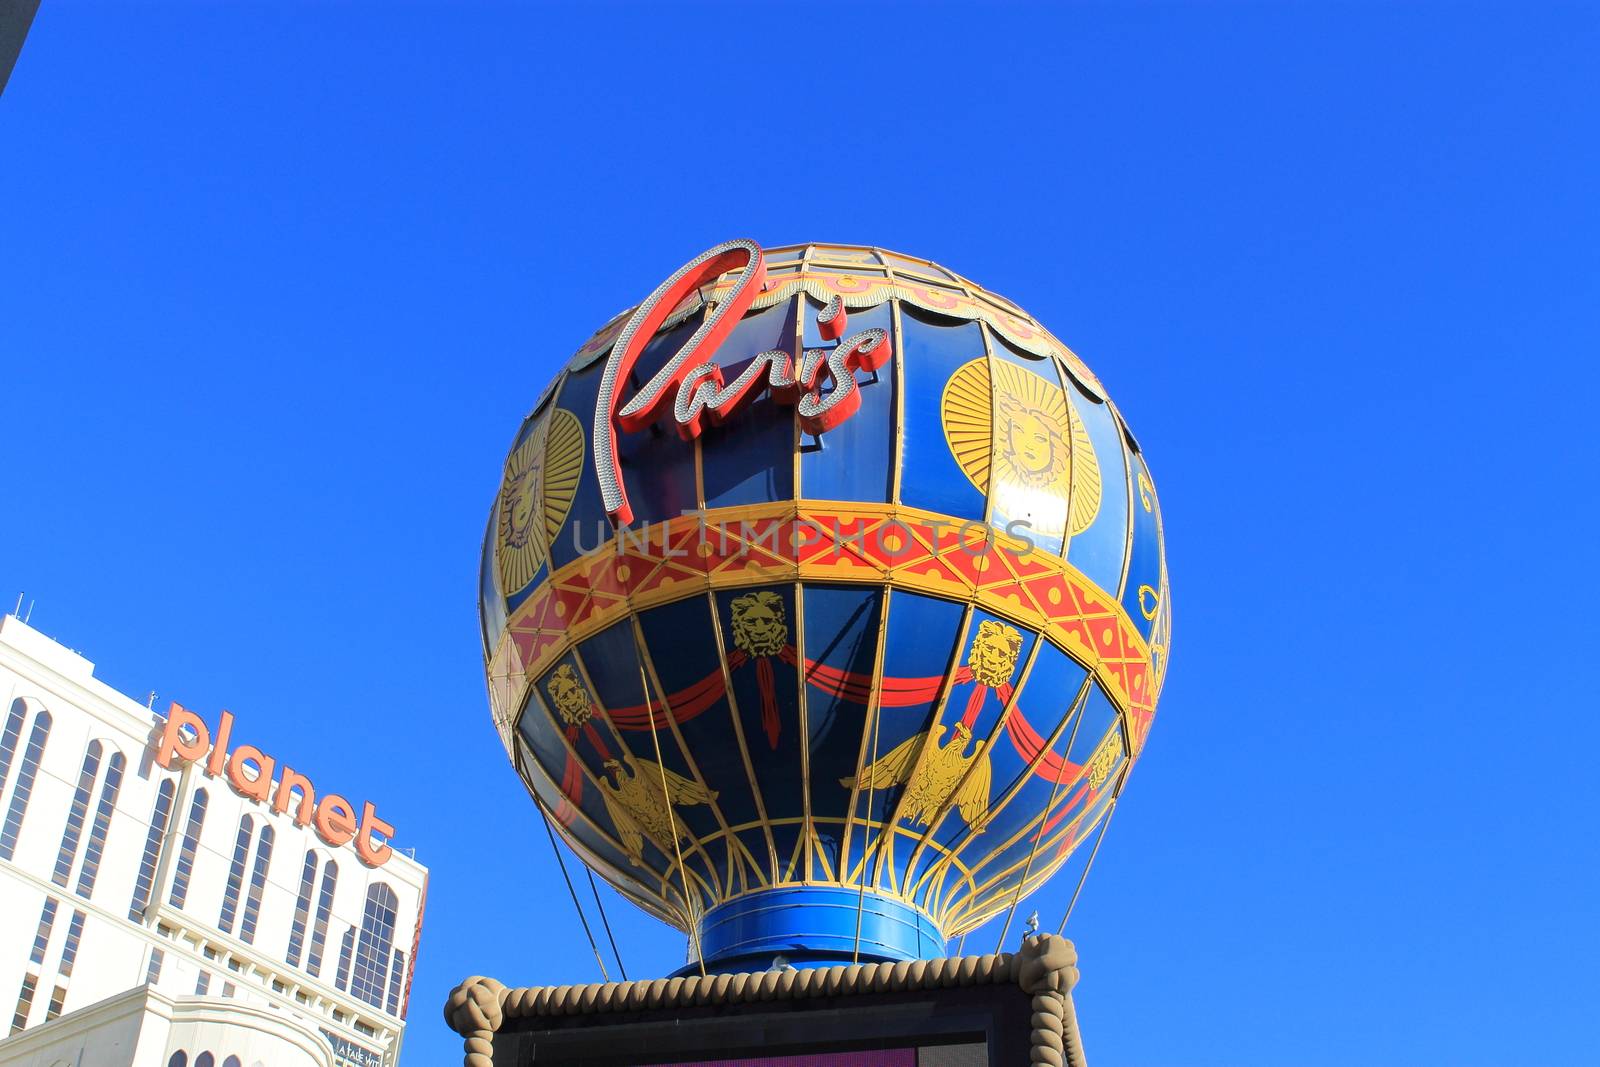 Las Vegas Paris Hotel by Ffooter